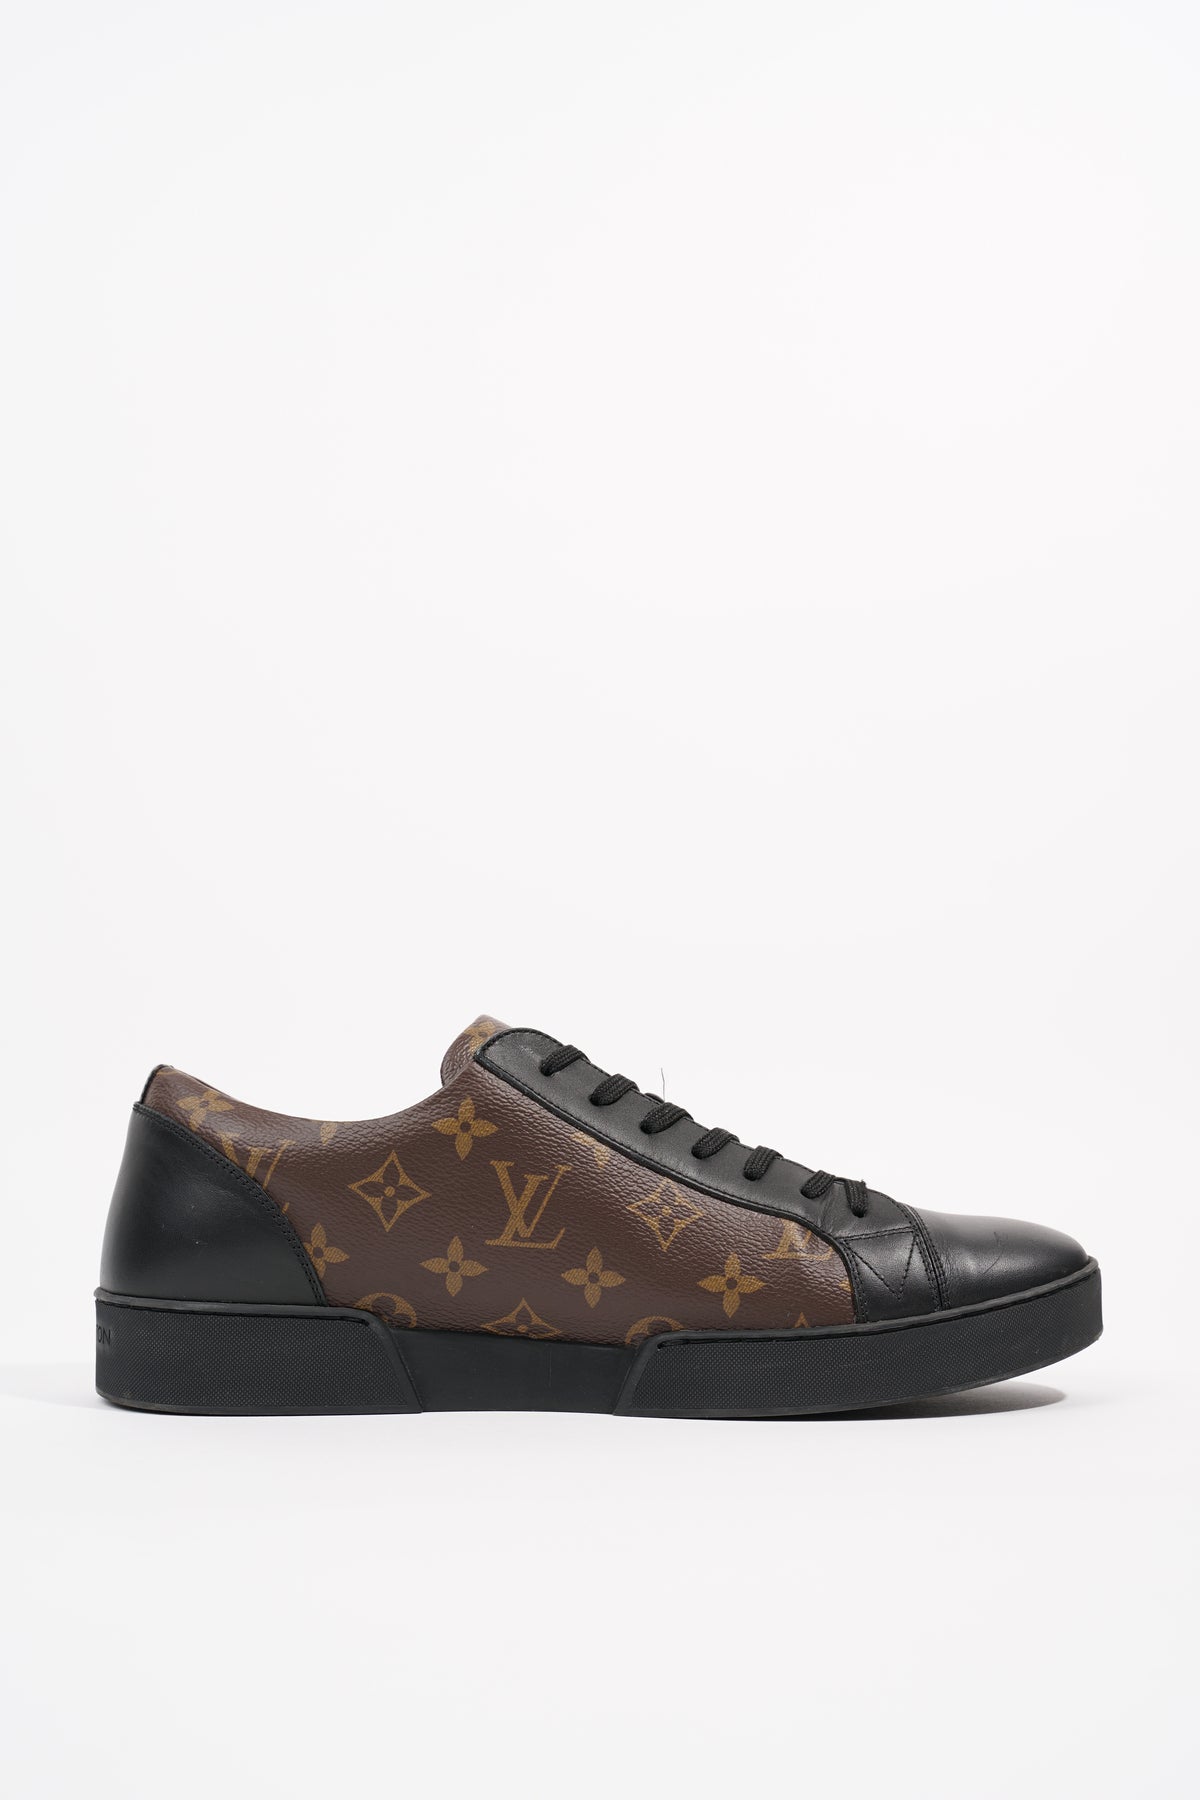 Louis Vuitton Mens Match Up Sneaker Monogram Black EU 43.5 / UK